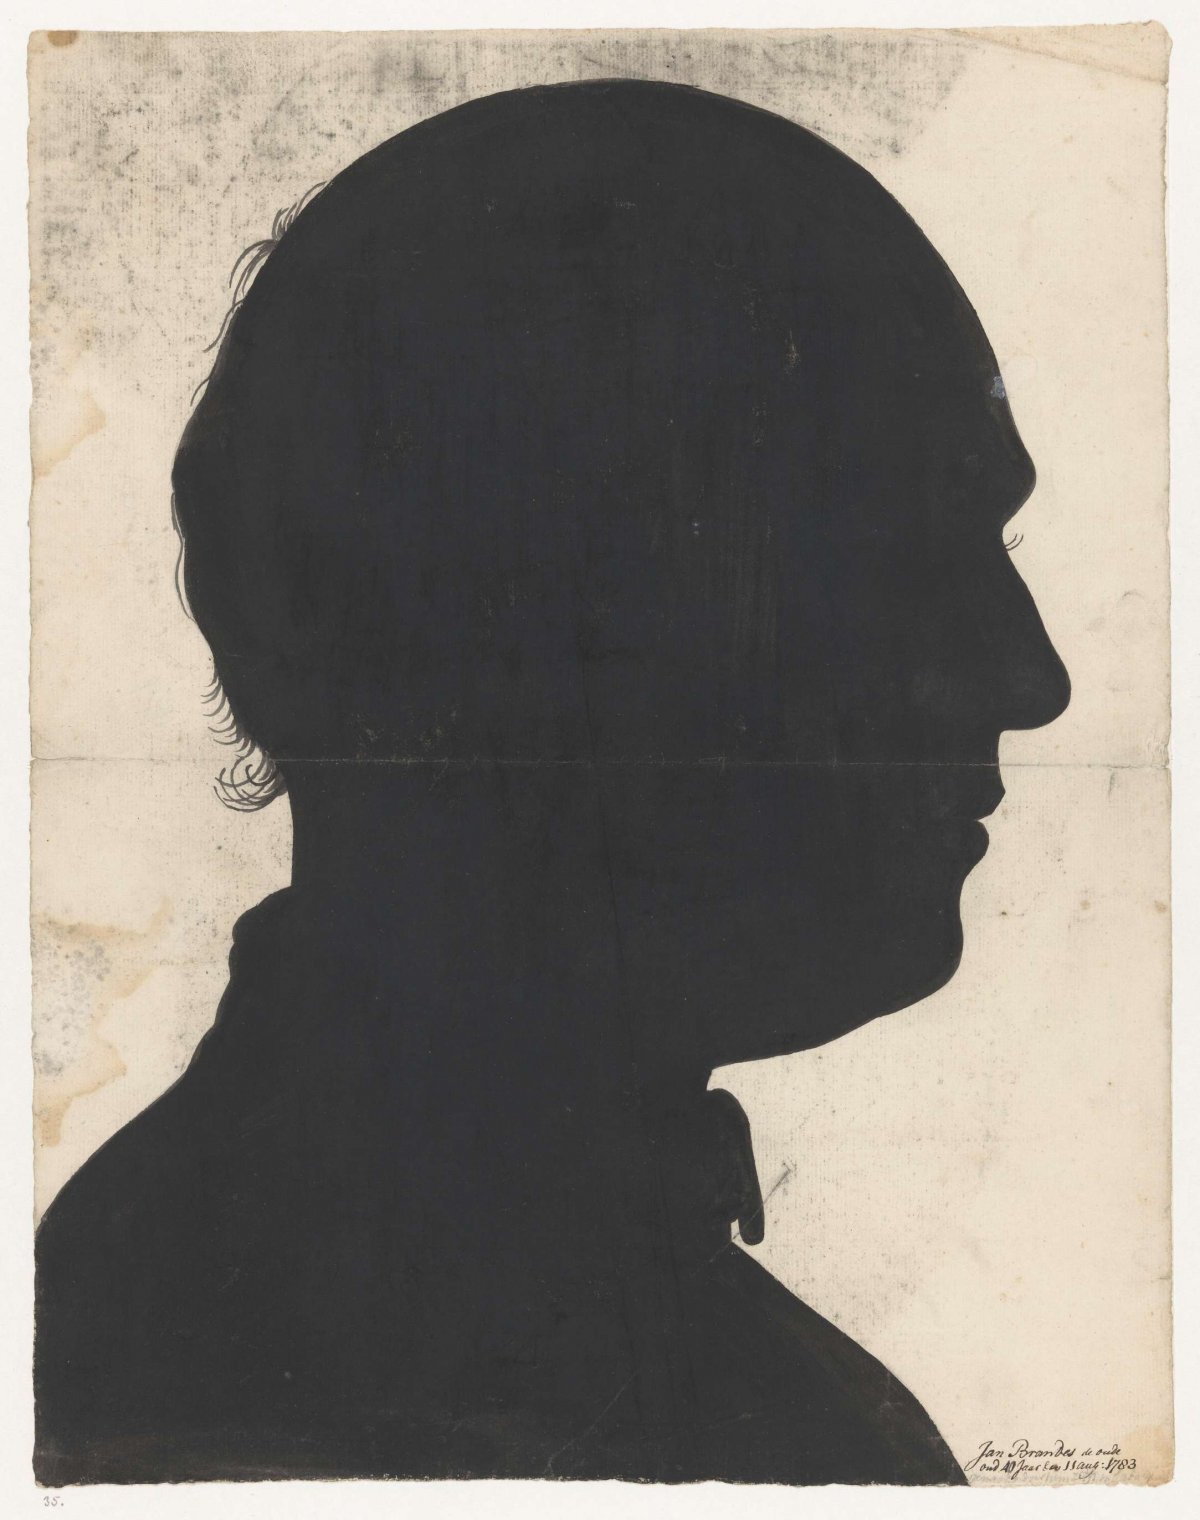 Silhouette portrait of Jan Brandes, Jan Brandes, 1783